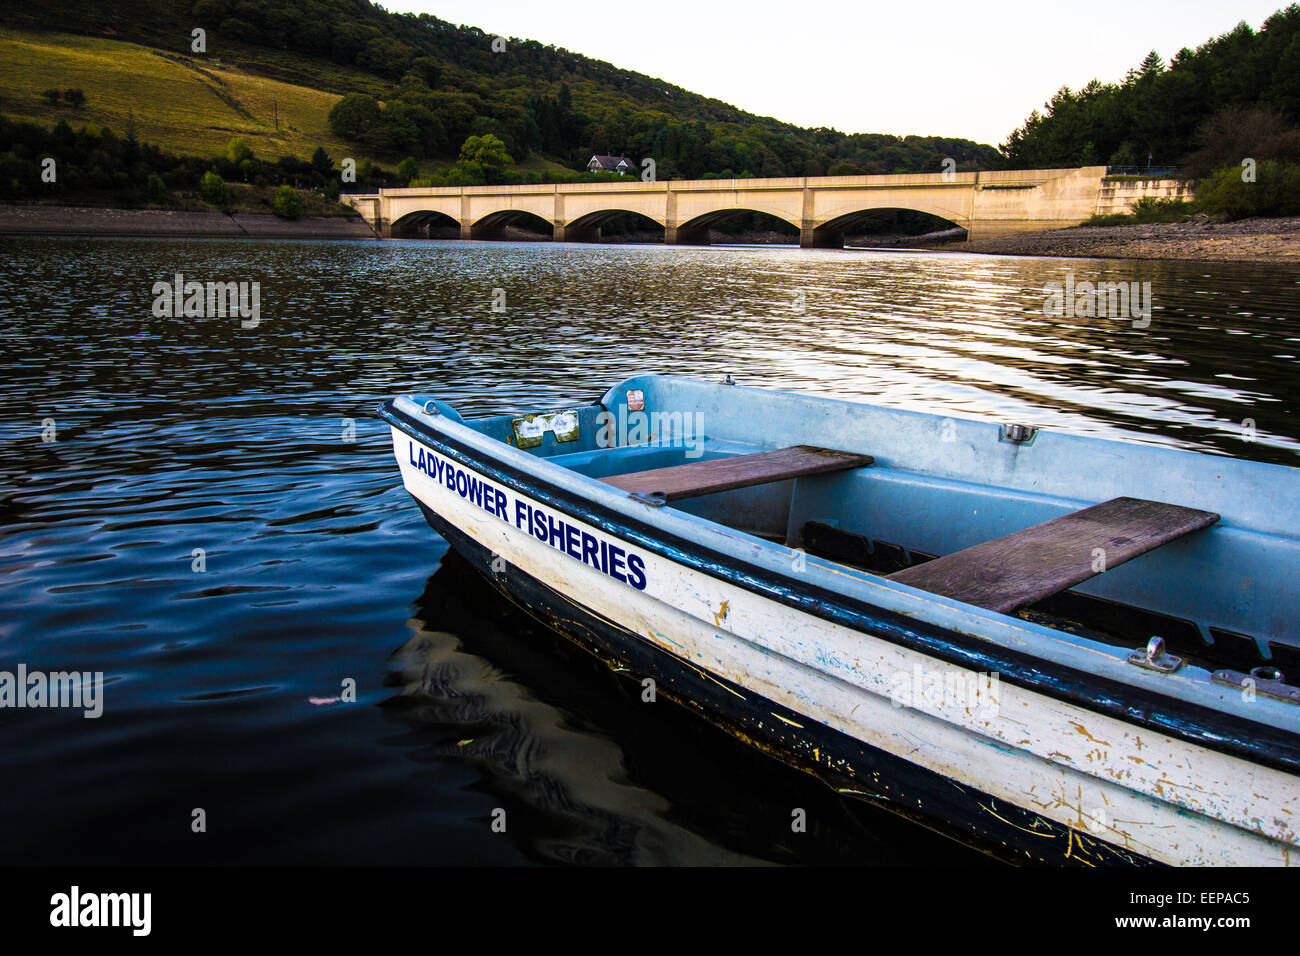 Ladybower Fisheries Boat and Viaduct Stock Photo